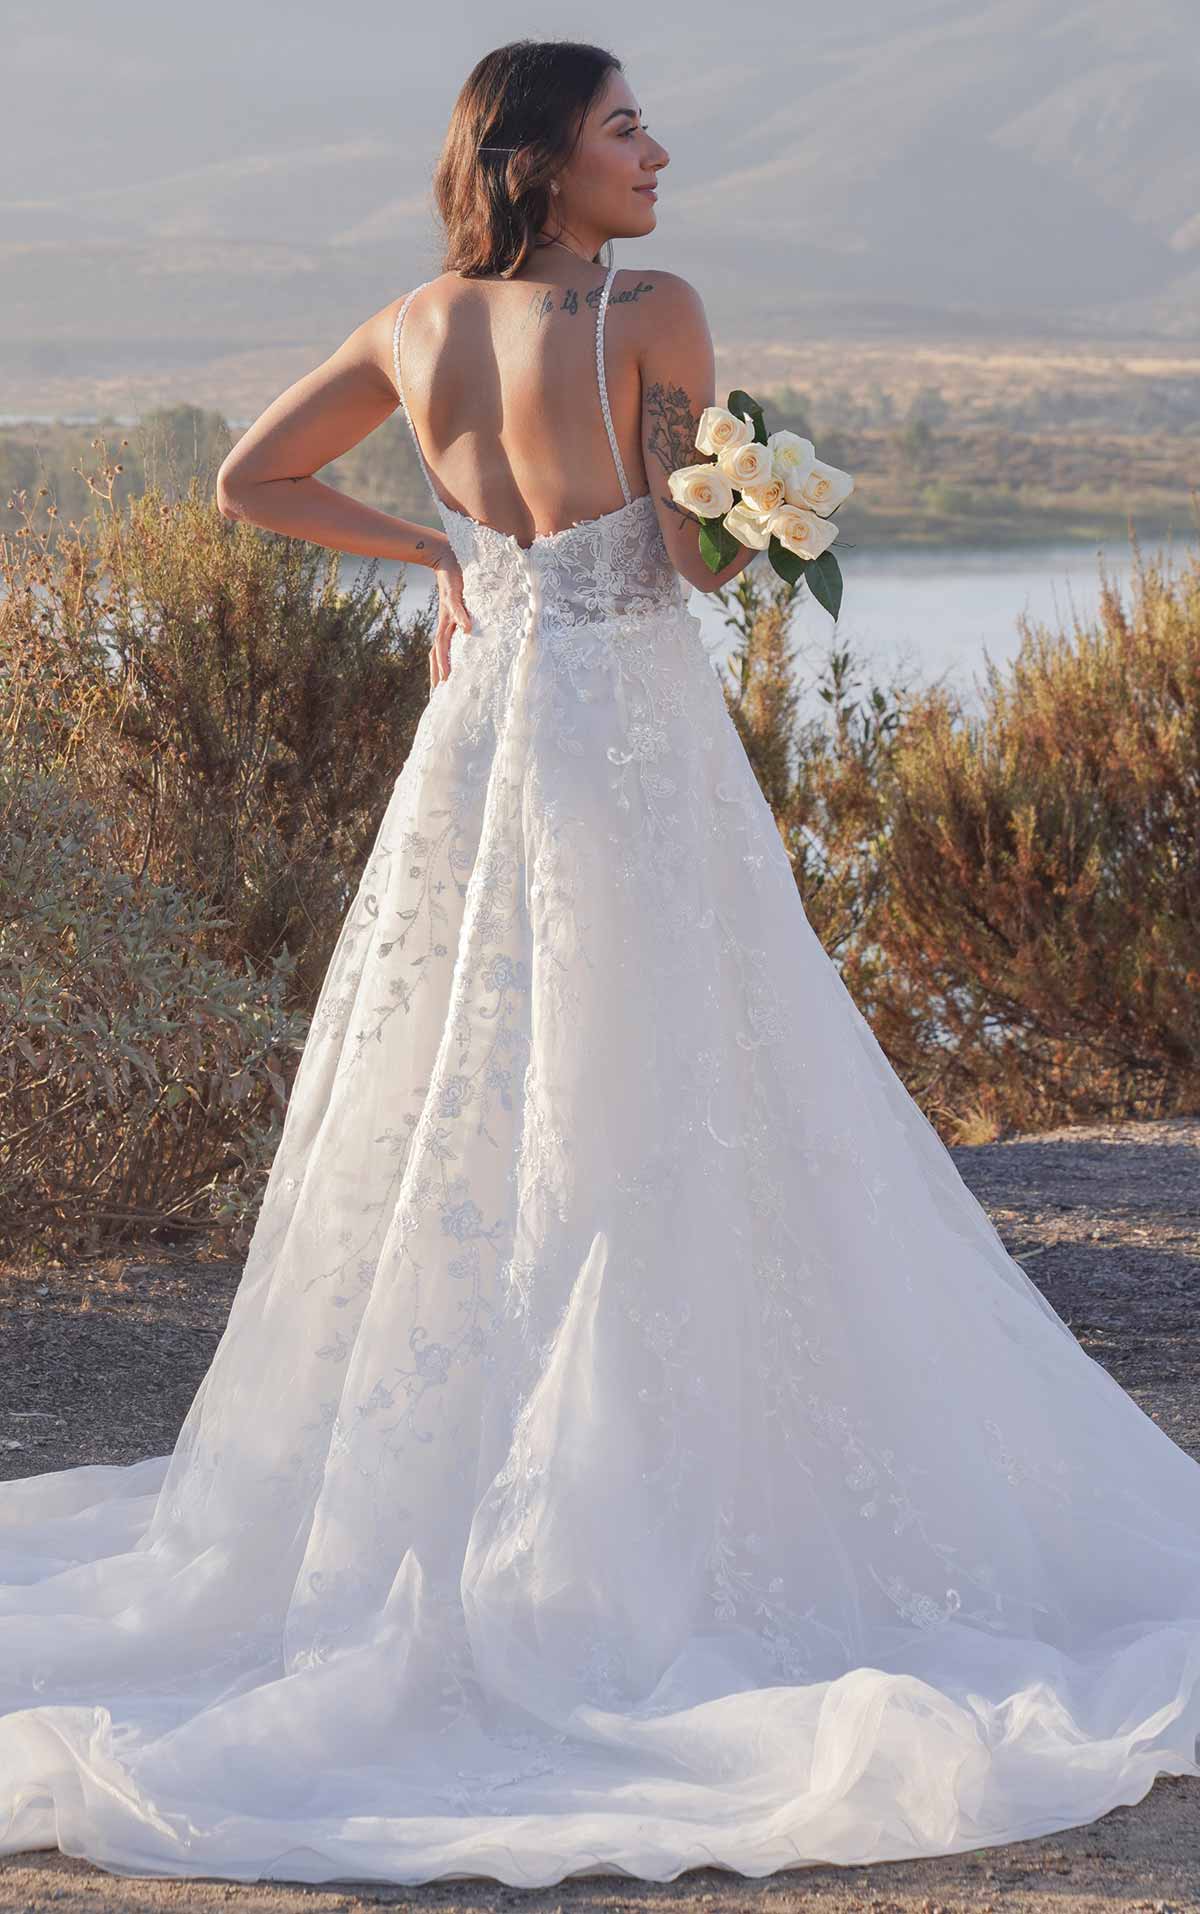 Romantic Floral Wedding Dress with Sheer Bodice and Dot Details - Essense  of Australia Wedding Dresses